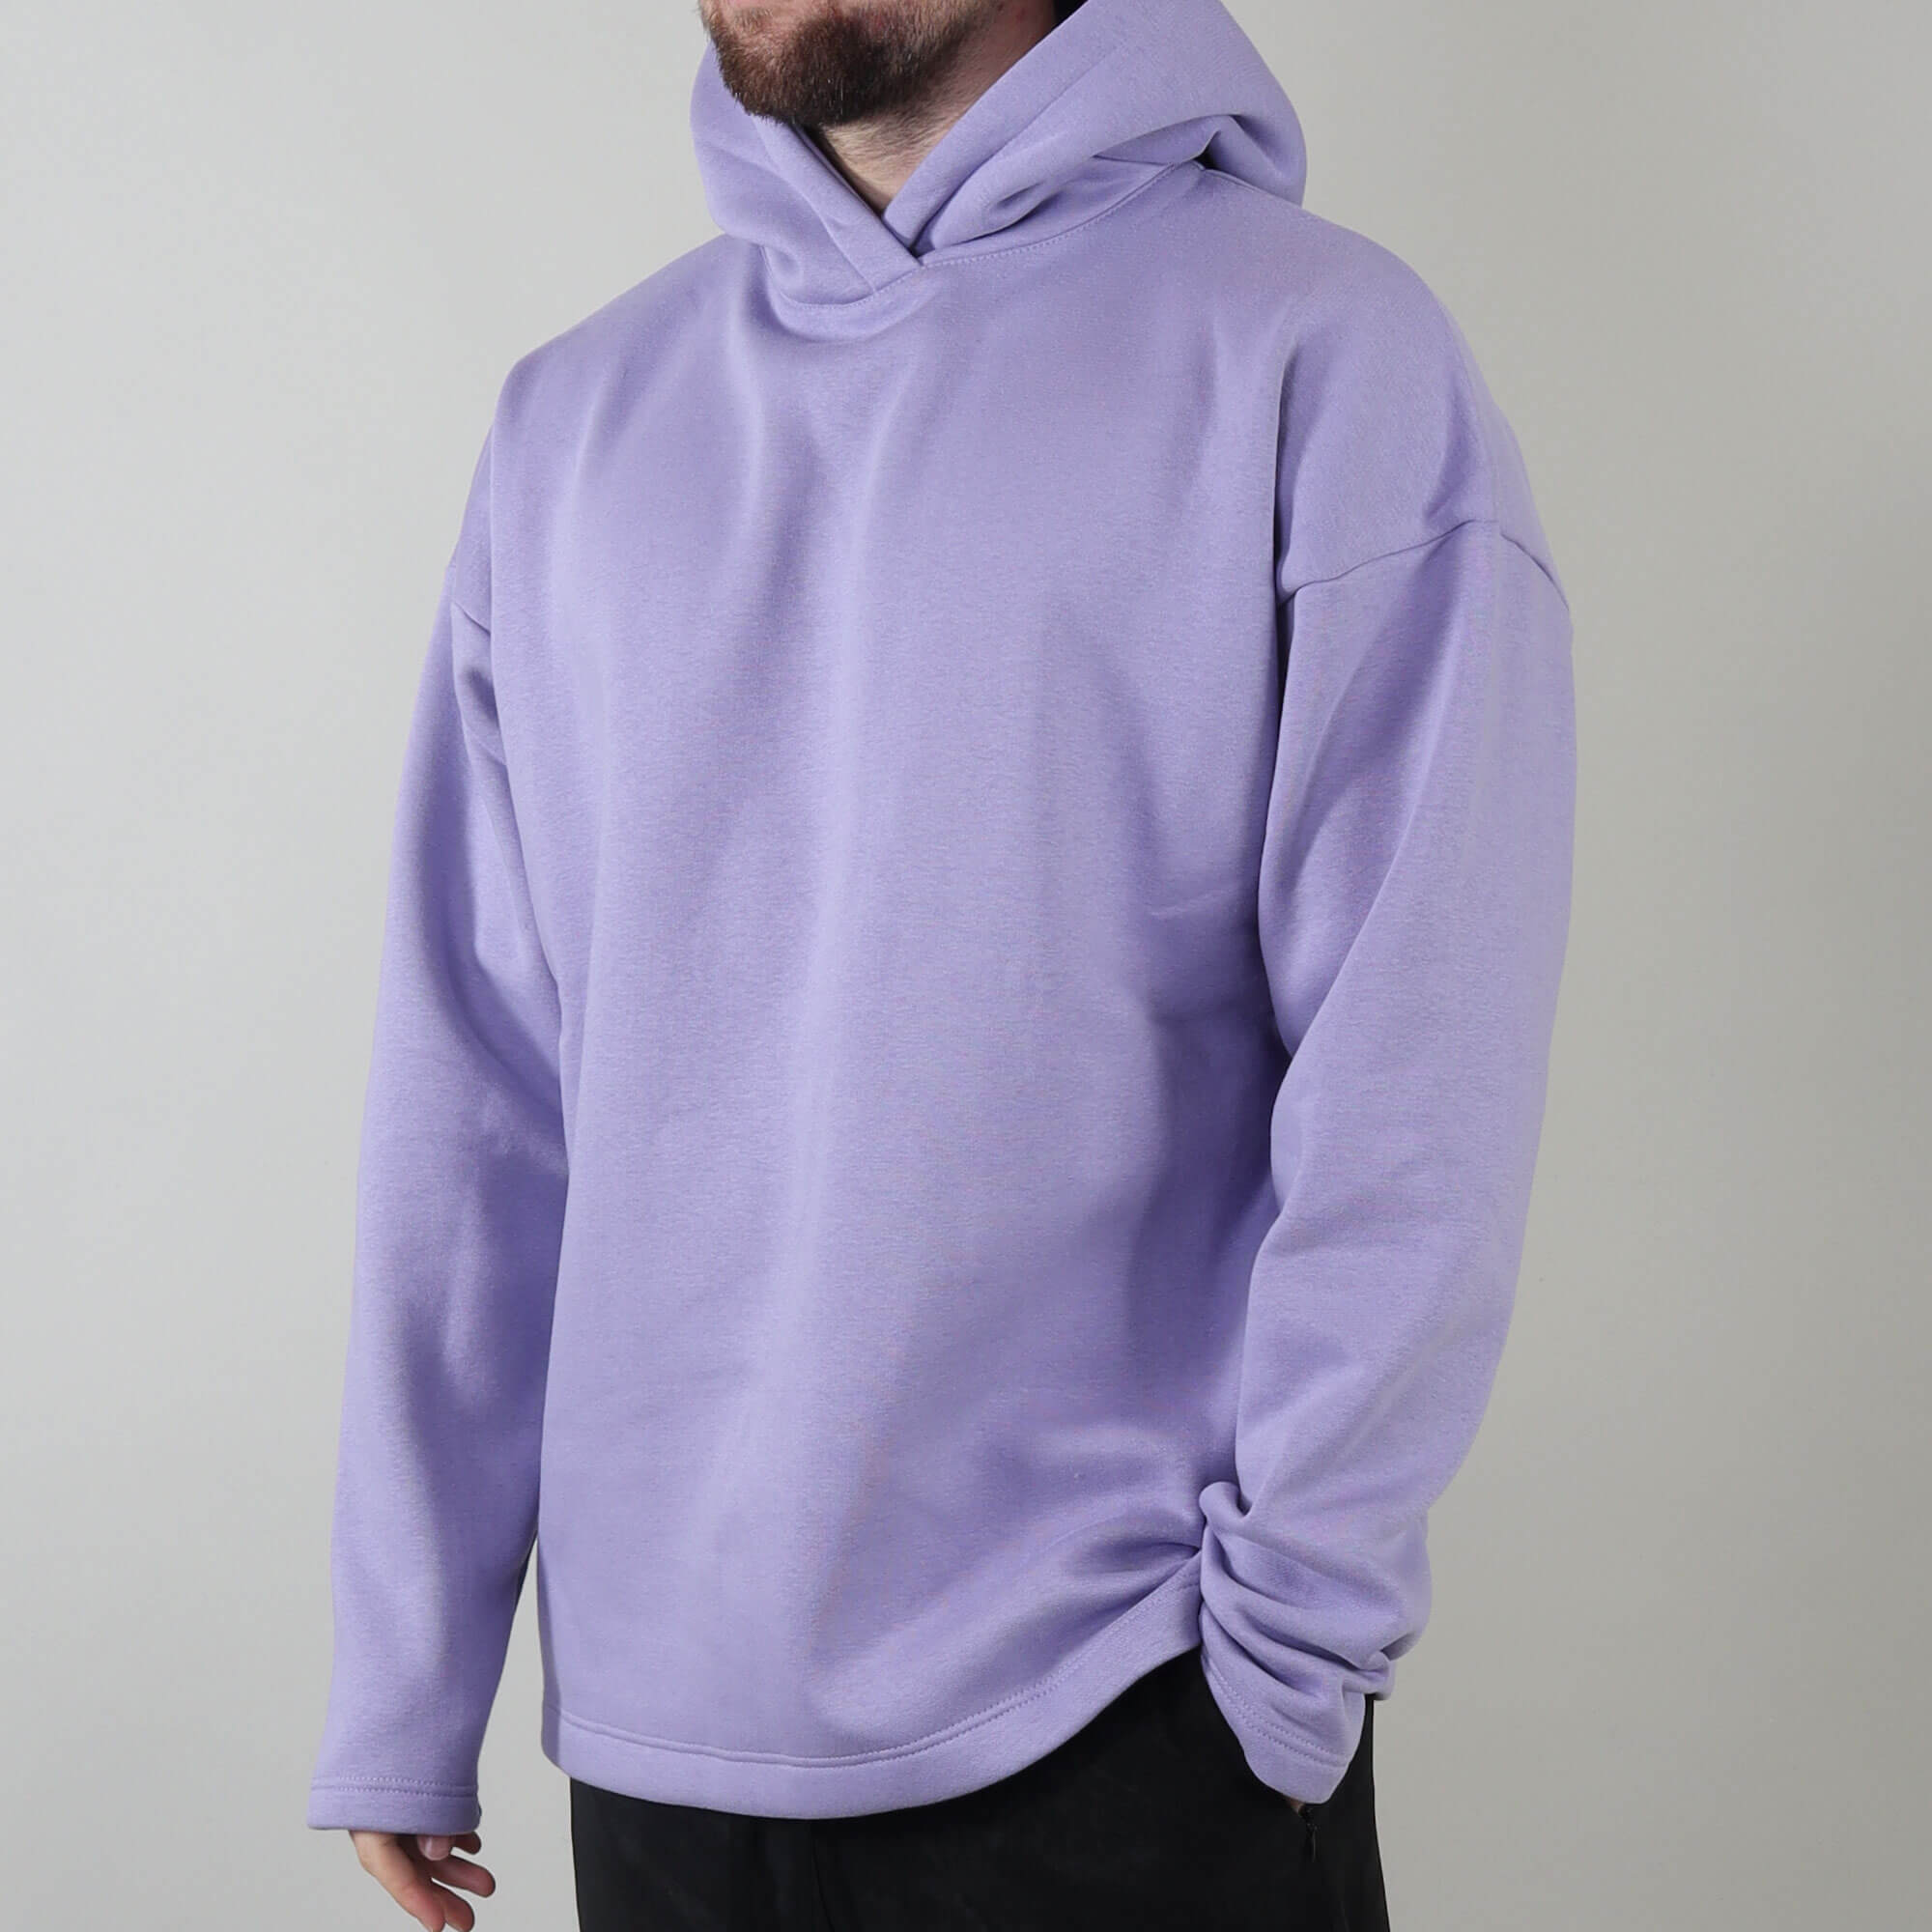 PRJCT hoodie lila